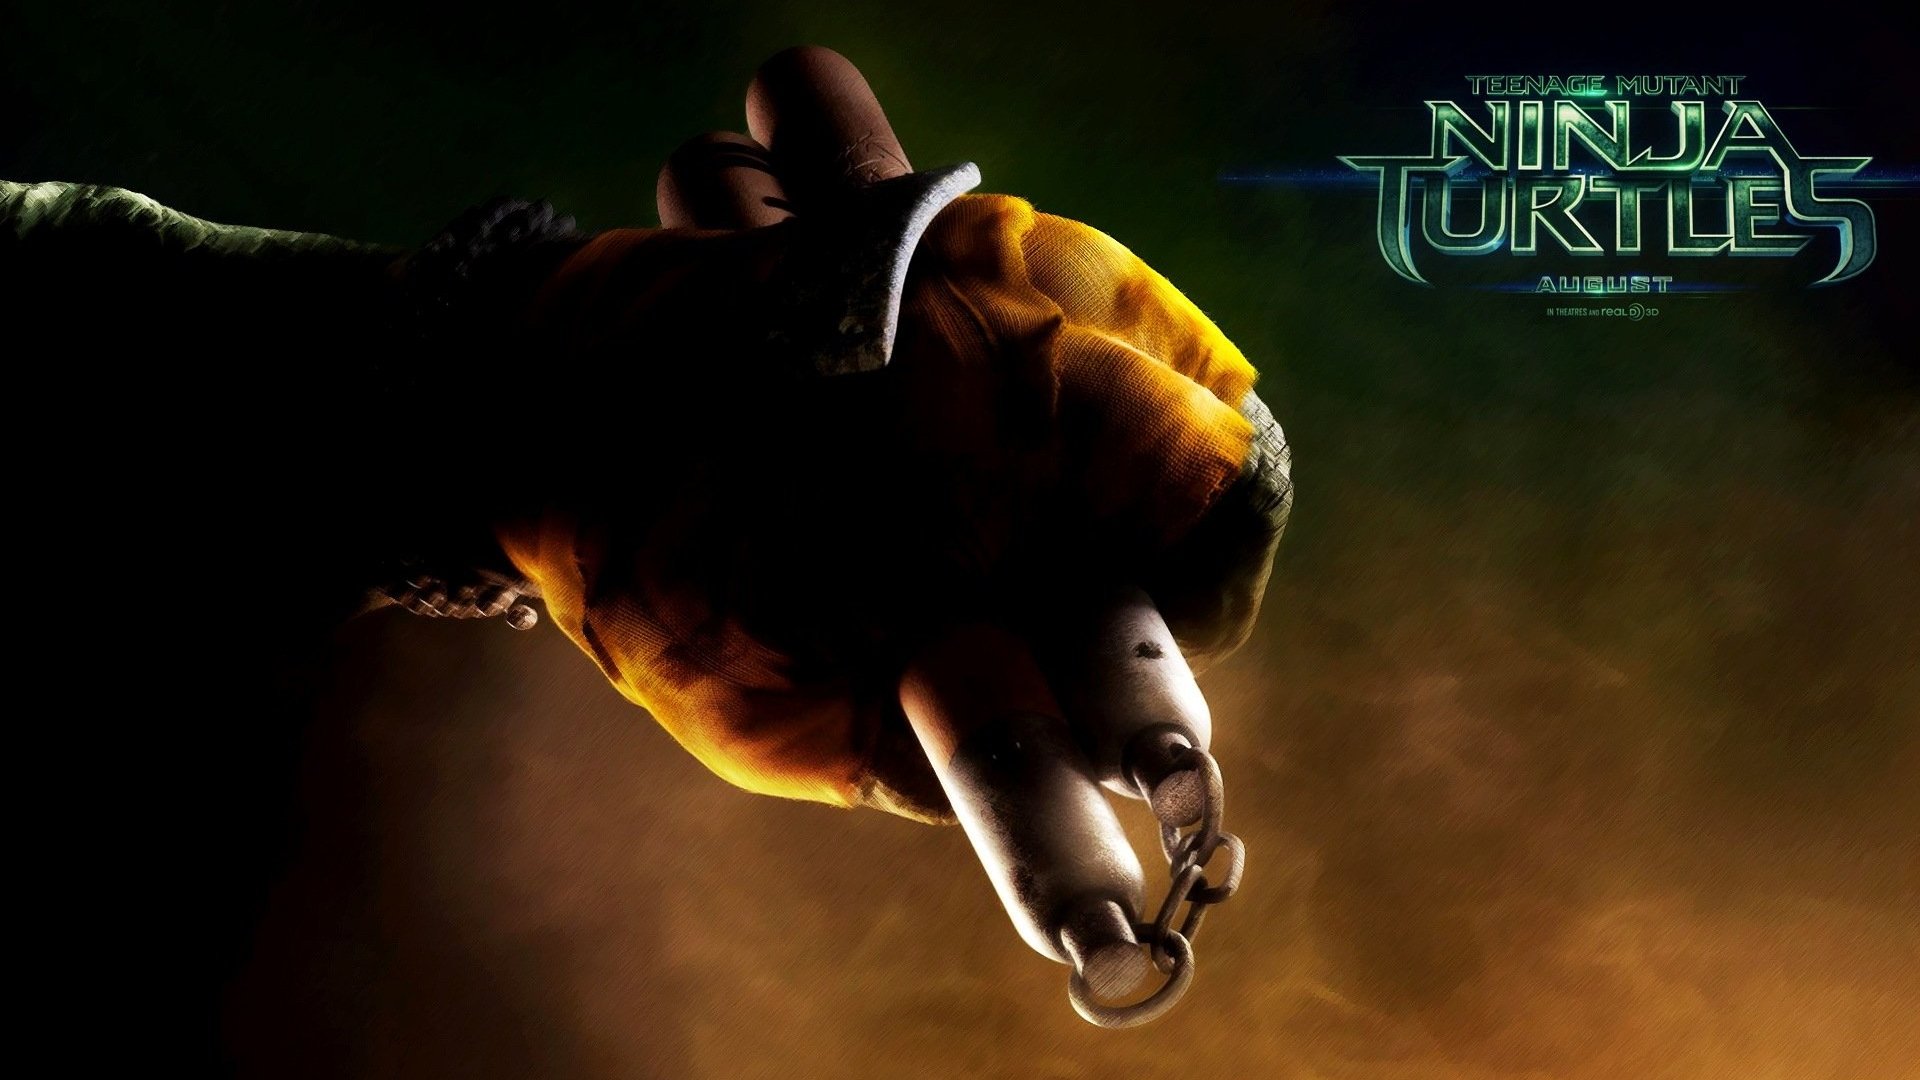 Best Teenage Mutant Ninja Turtles (2014) TMNT movie wallpaper ID:234200 for High Resolution 1080p computer